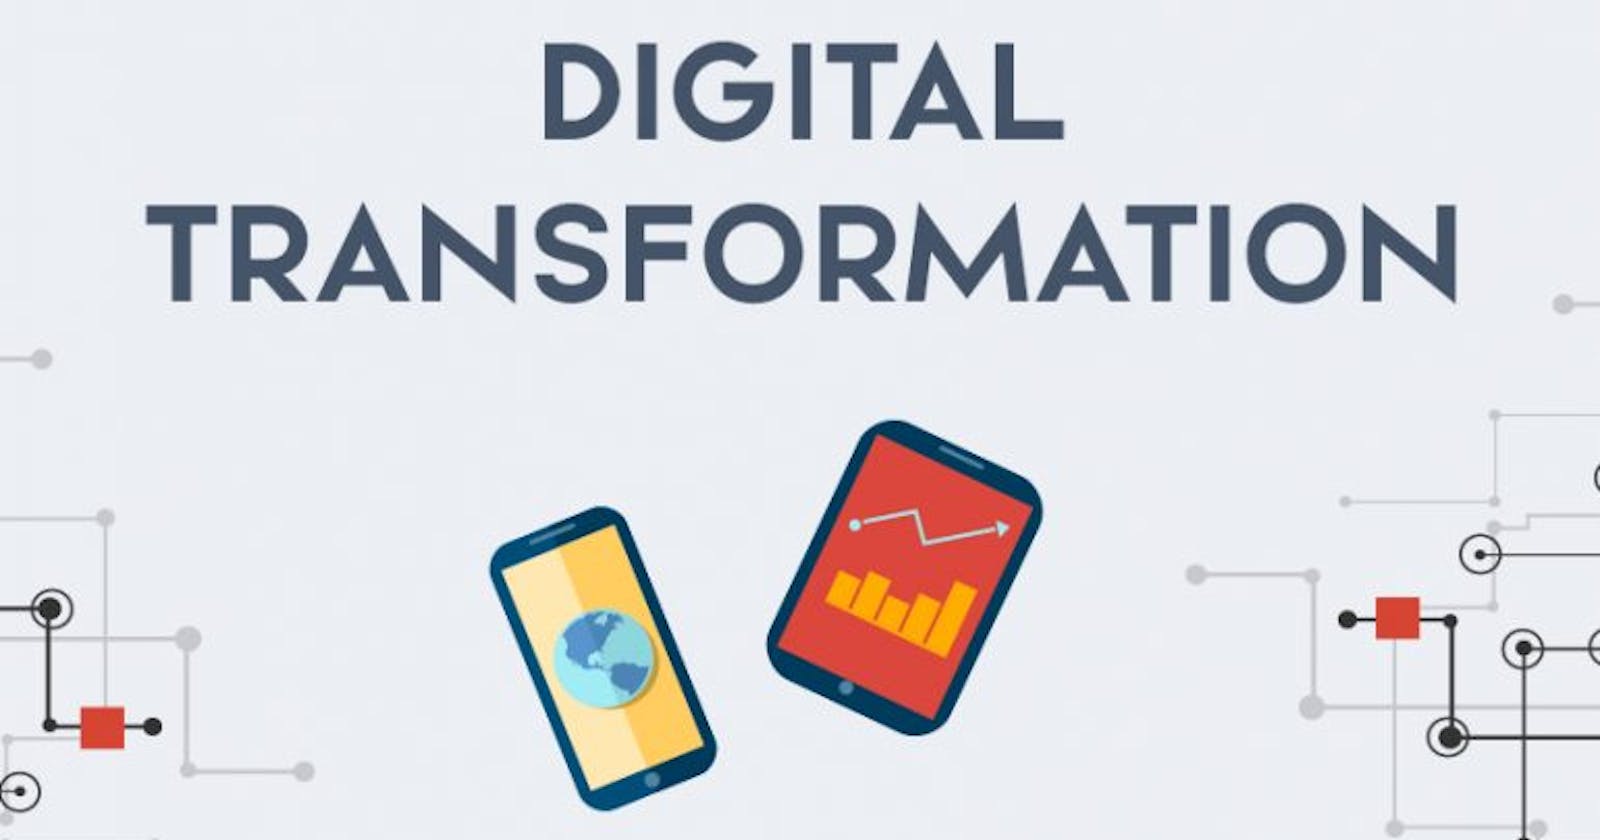 All About Digitalization: Digital Transformation